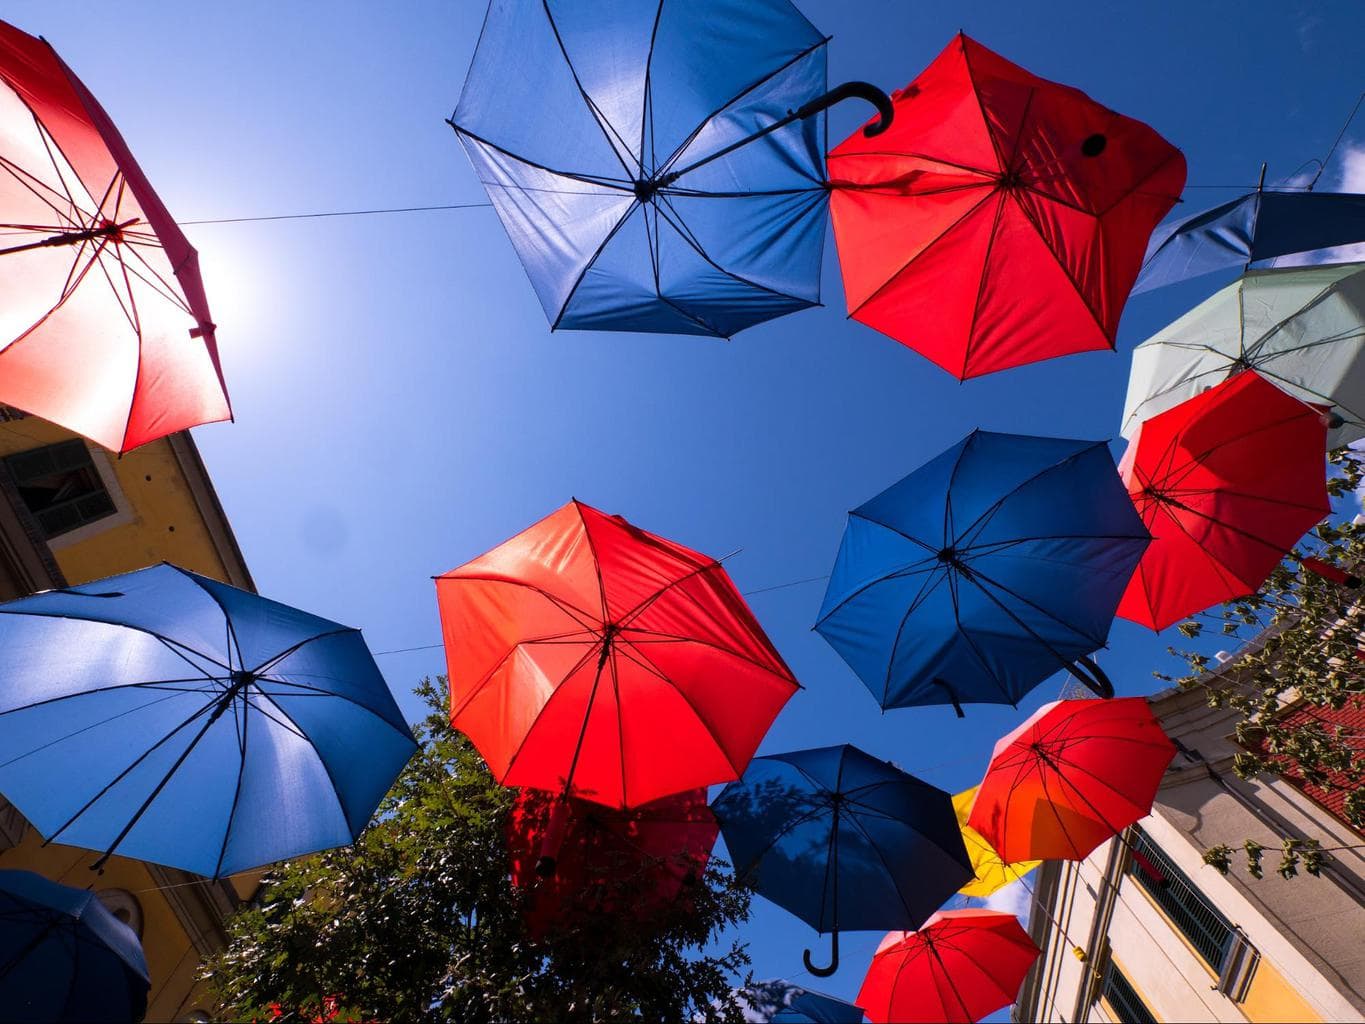 Upside down umbrellas in Tirana